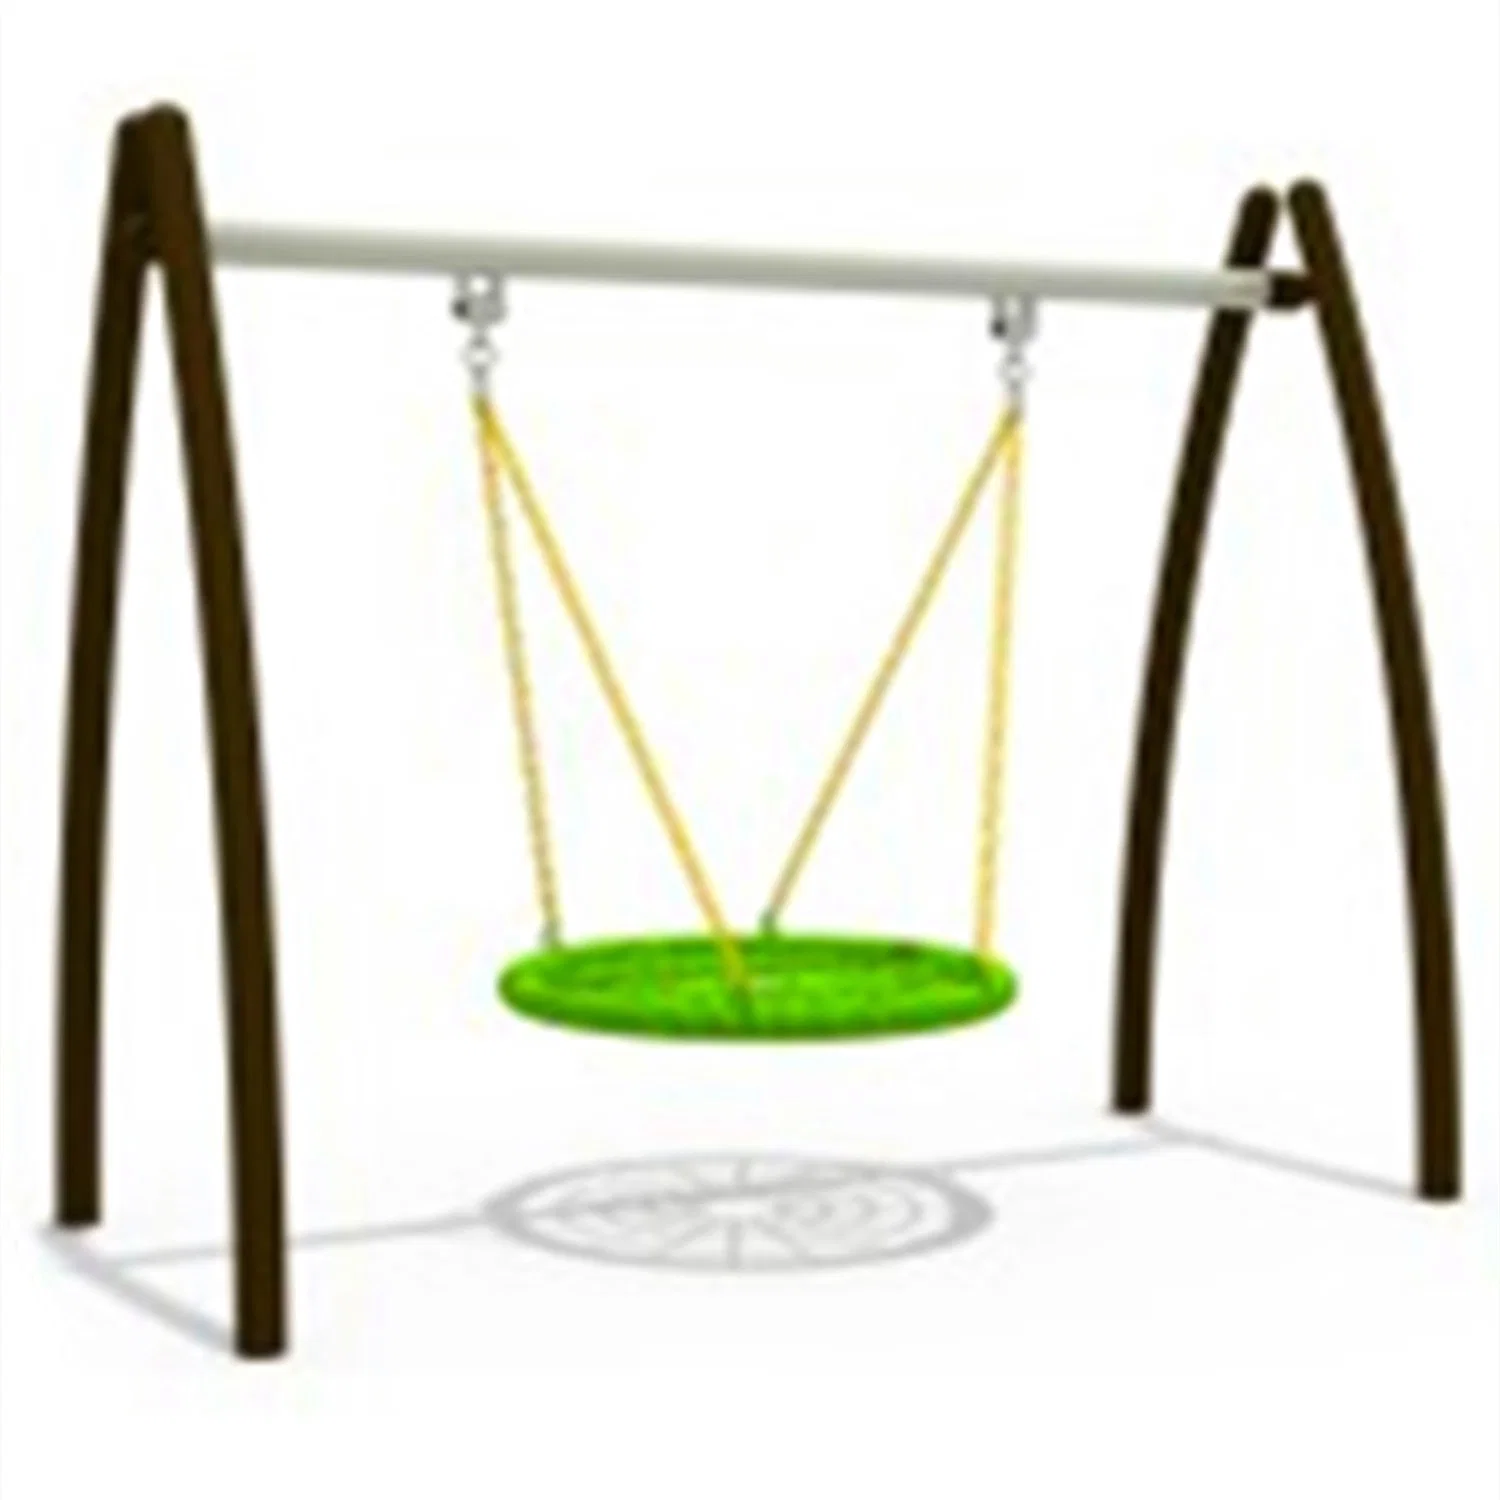 Community Outdoor Playground Kids Hanging Chair Swing Set